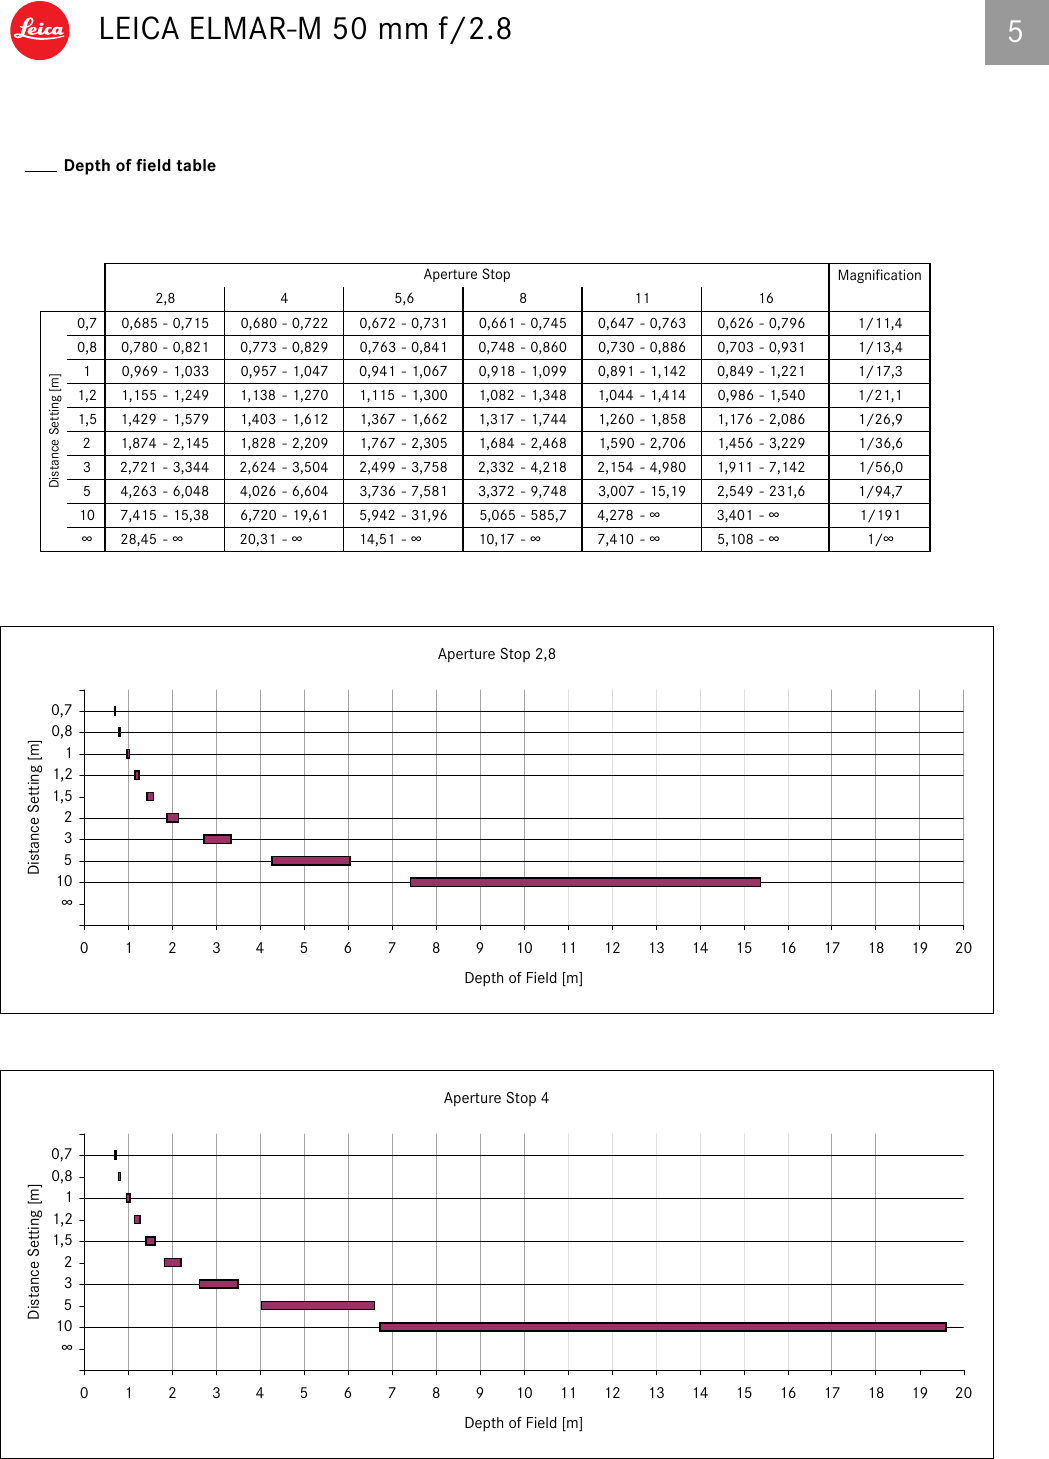 Page 5 of 7 - 10_ELMAR_M_engl Elmar-M 50 Mm Technical Data En